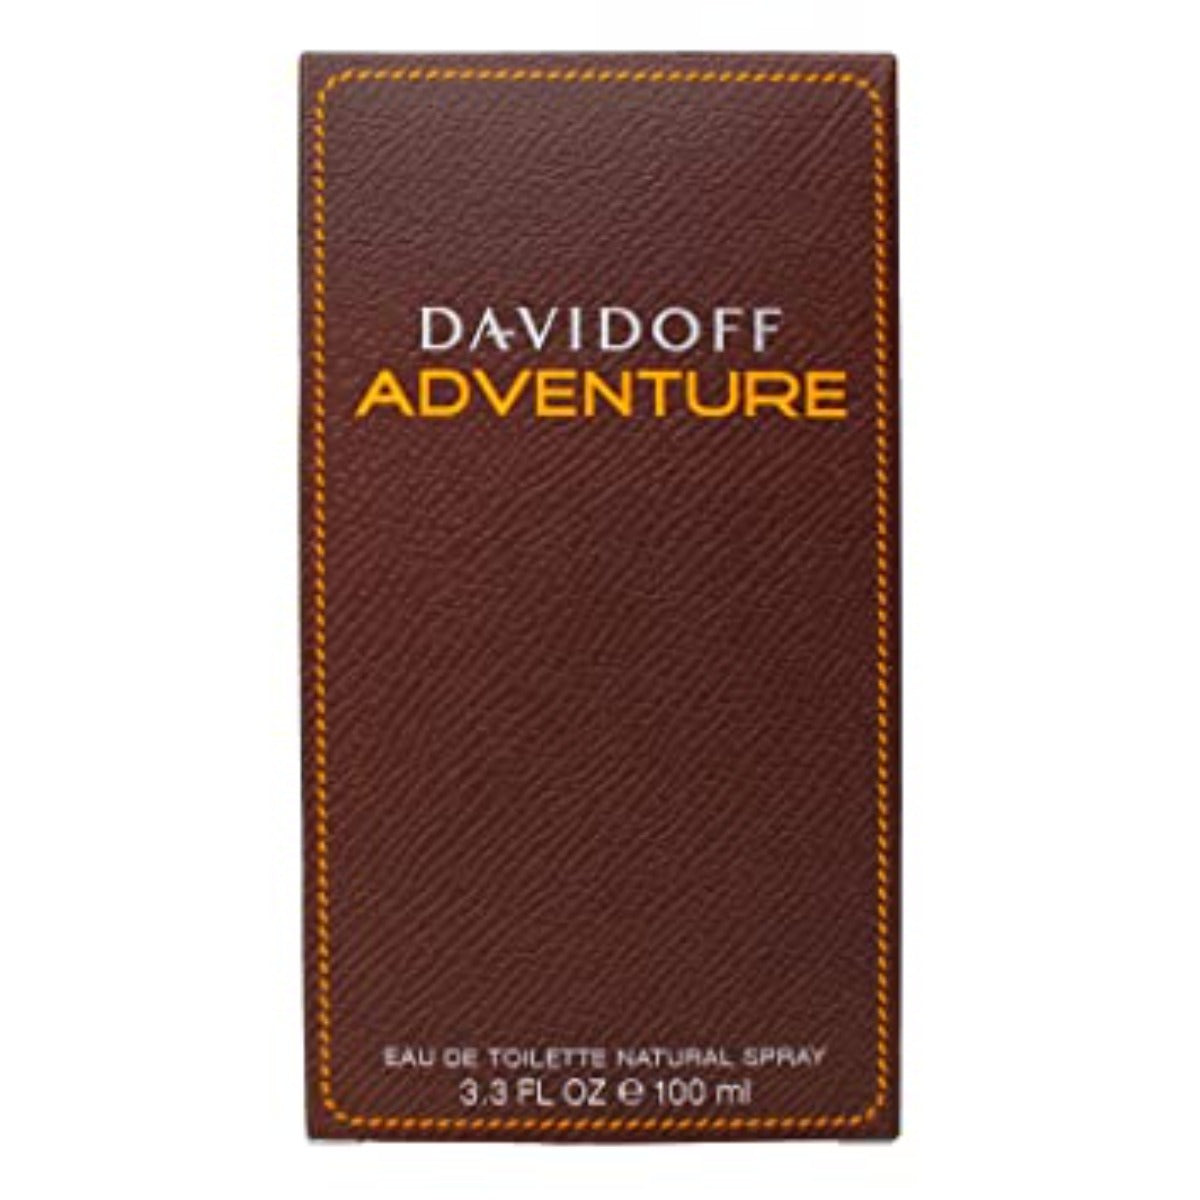 Davidoff Adventure Eau De Toilette for Men 100 ml Davidoff